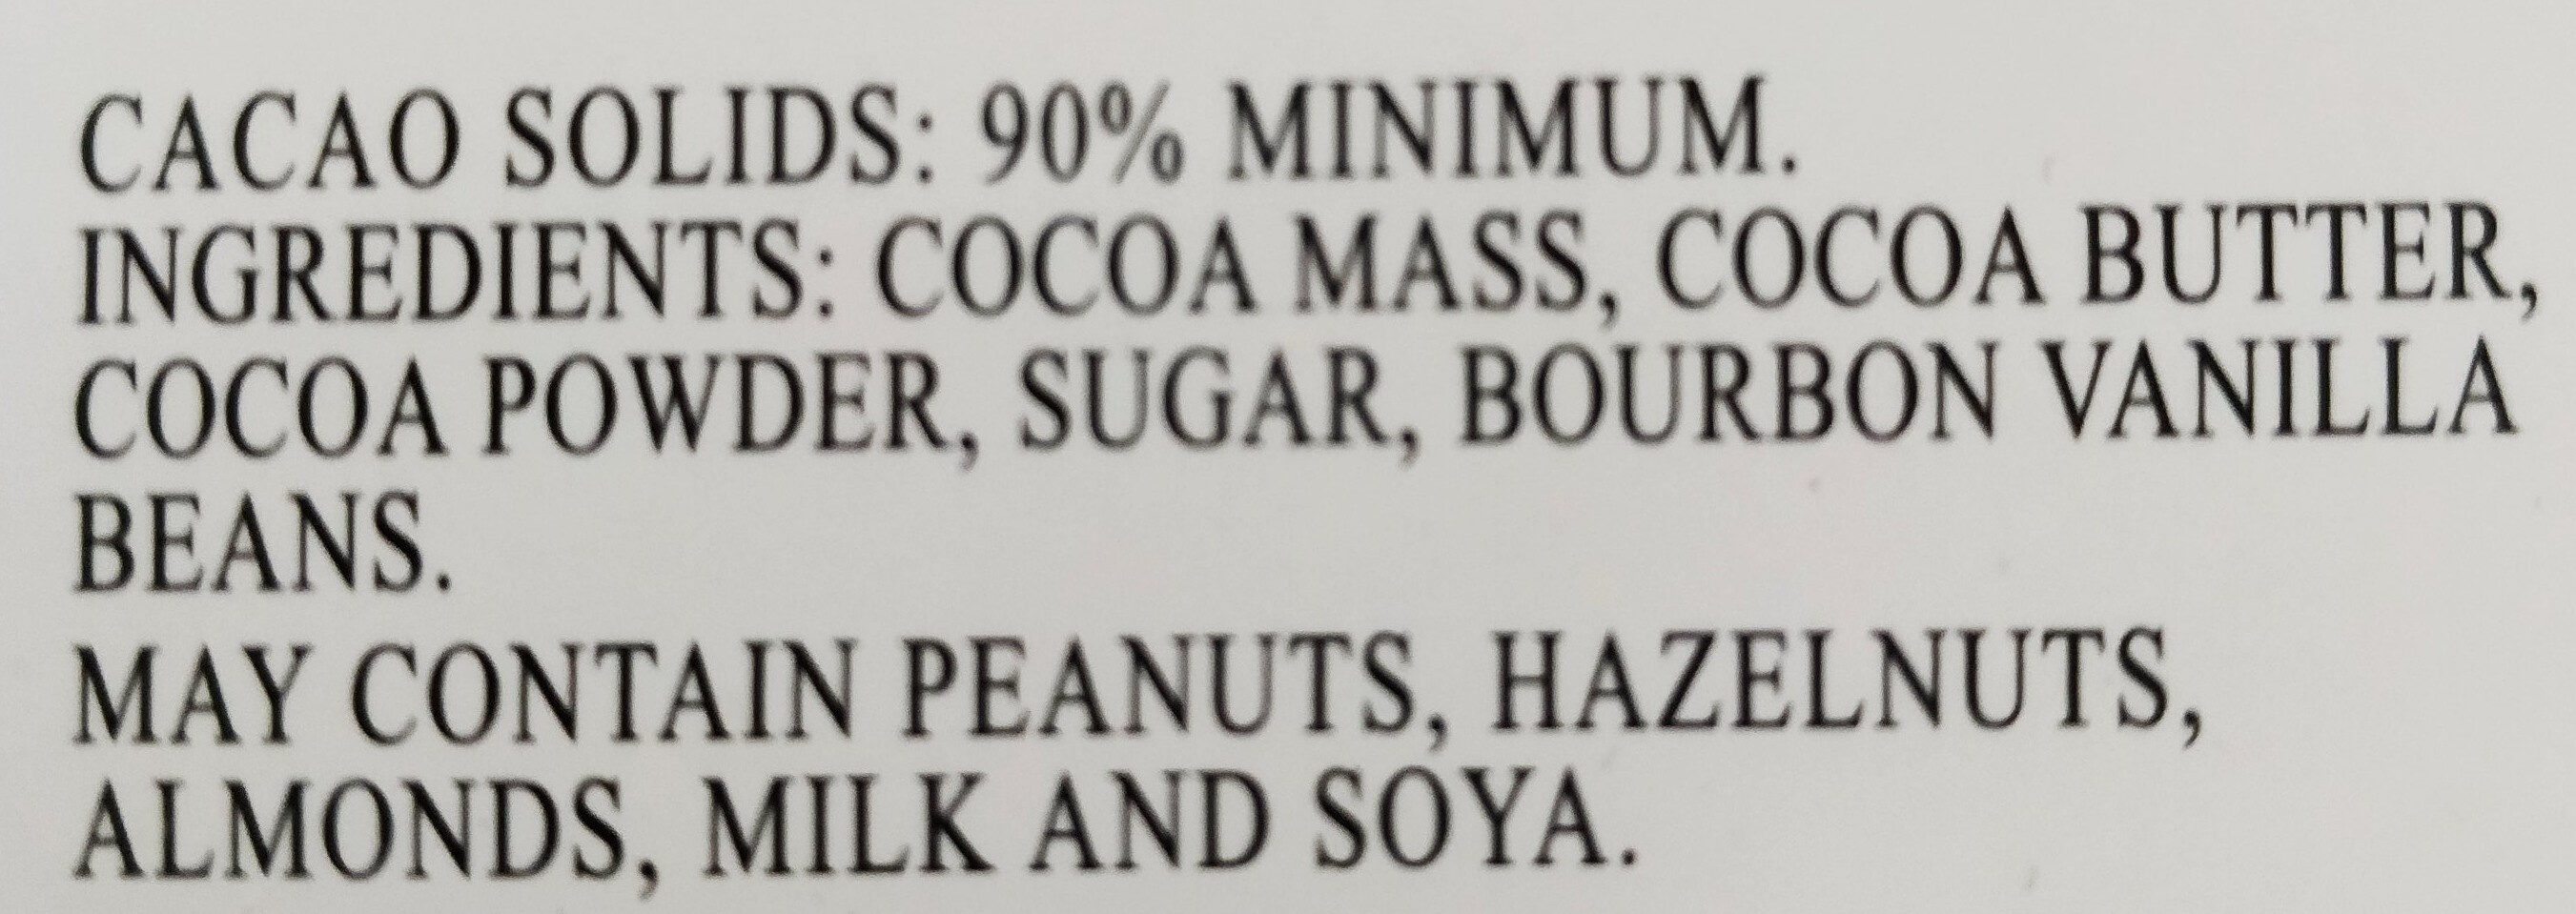 Supreme dark 90% cacao - Ingredients - en